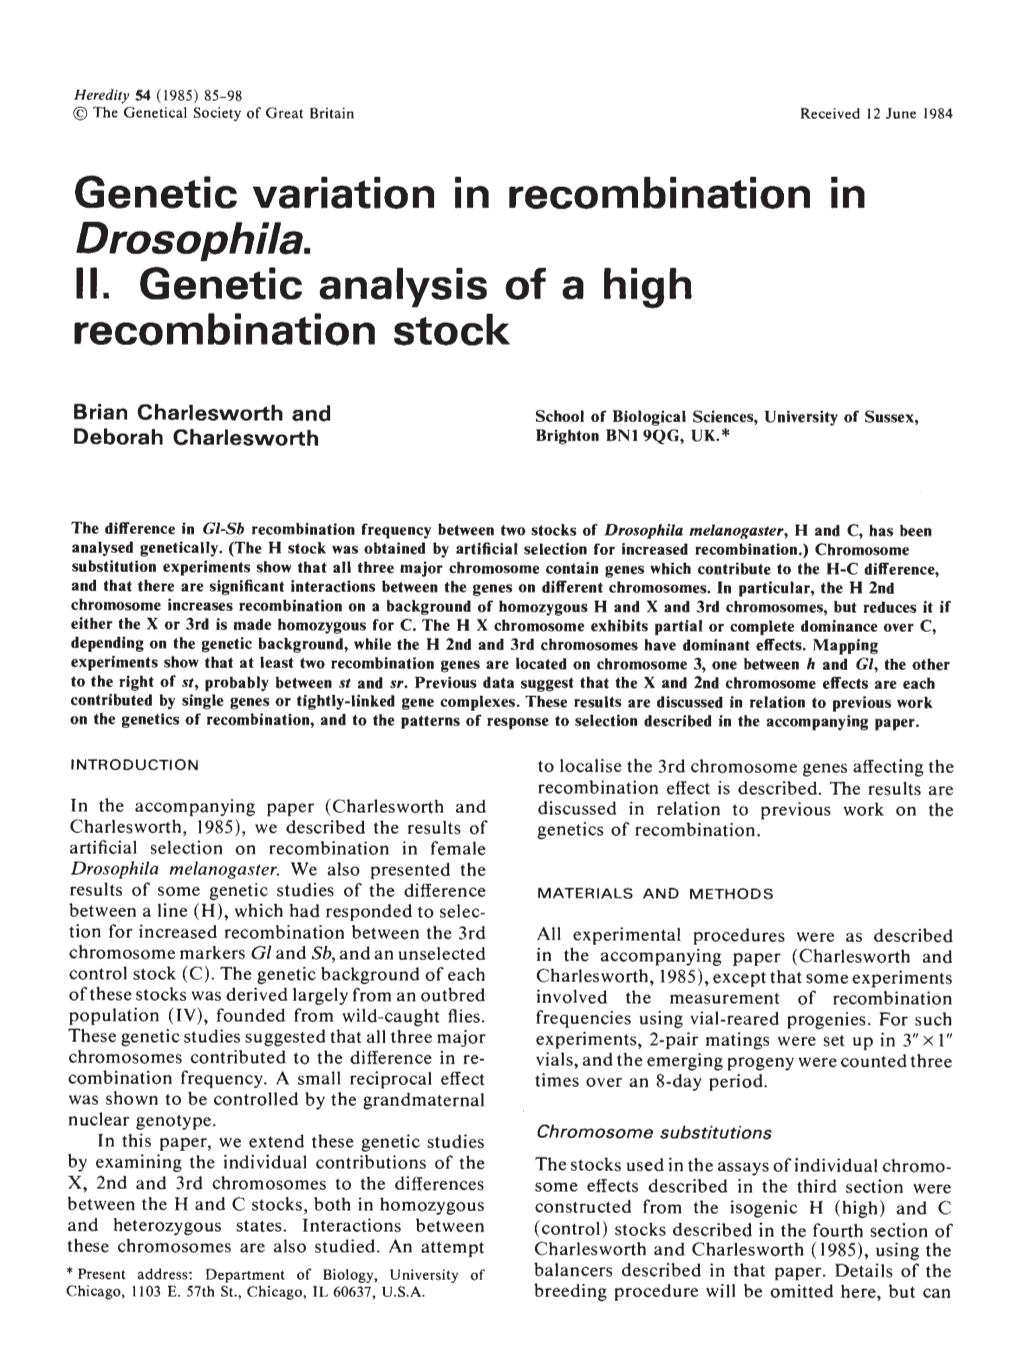 II. Genetic Analysis of a High Recombination Stock